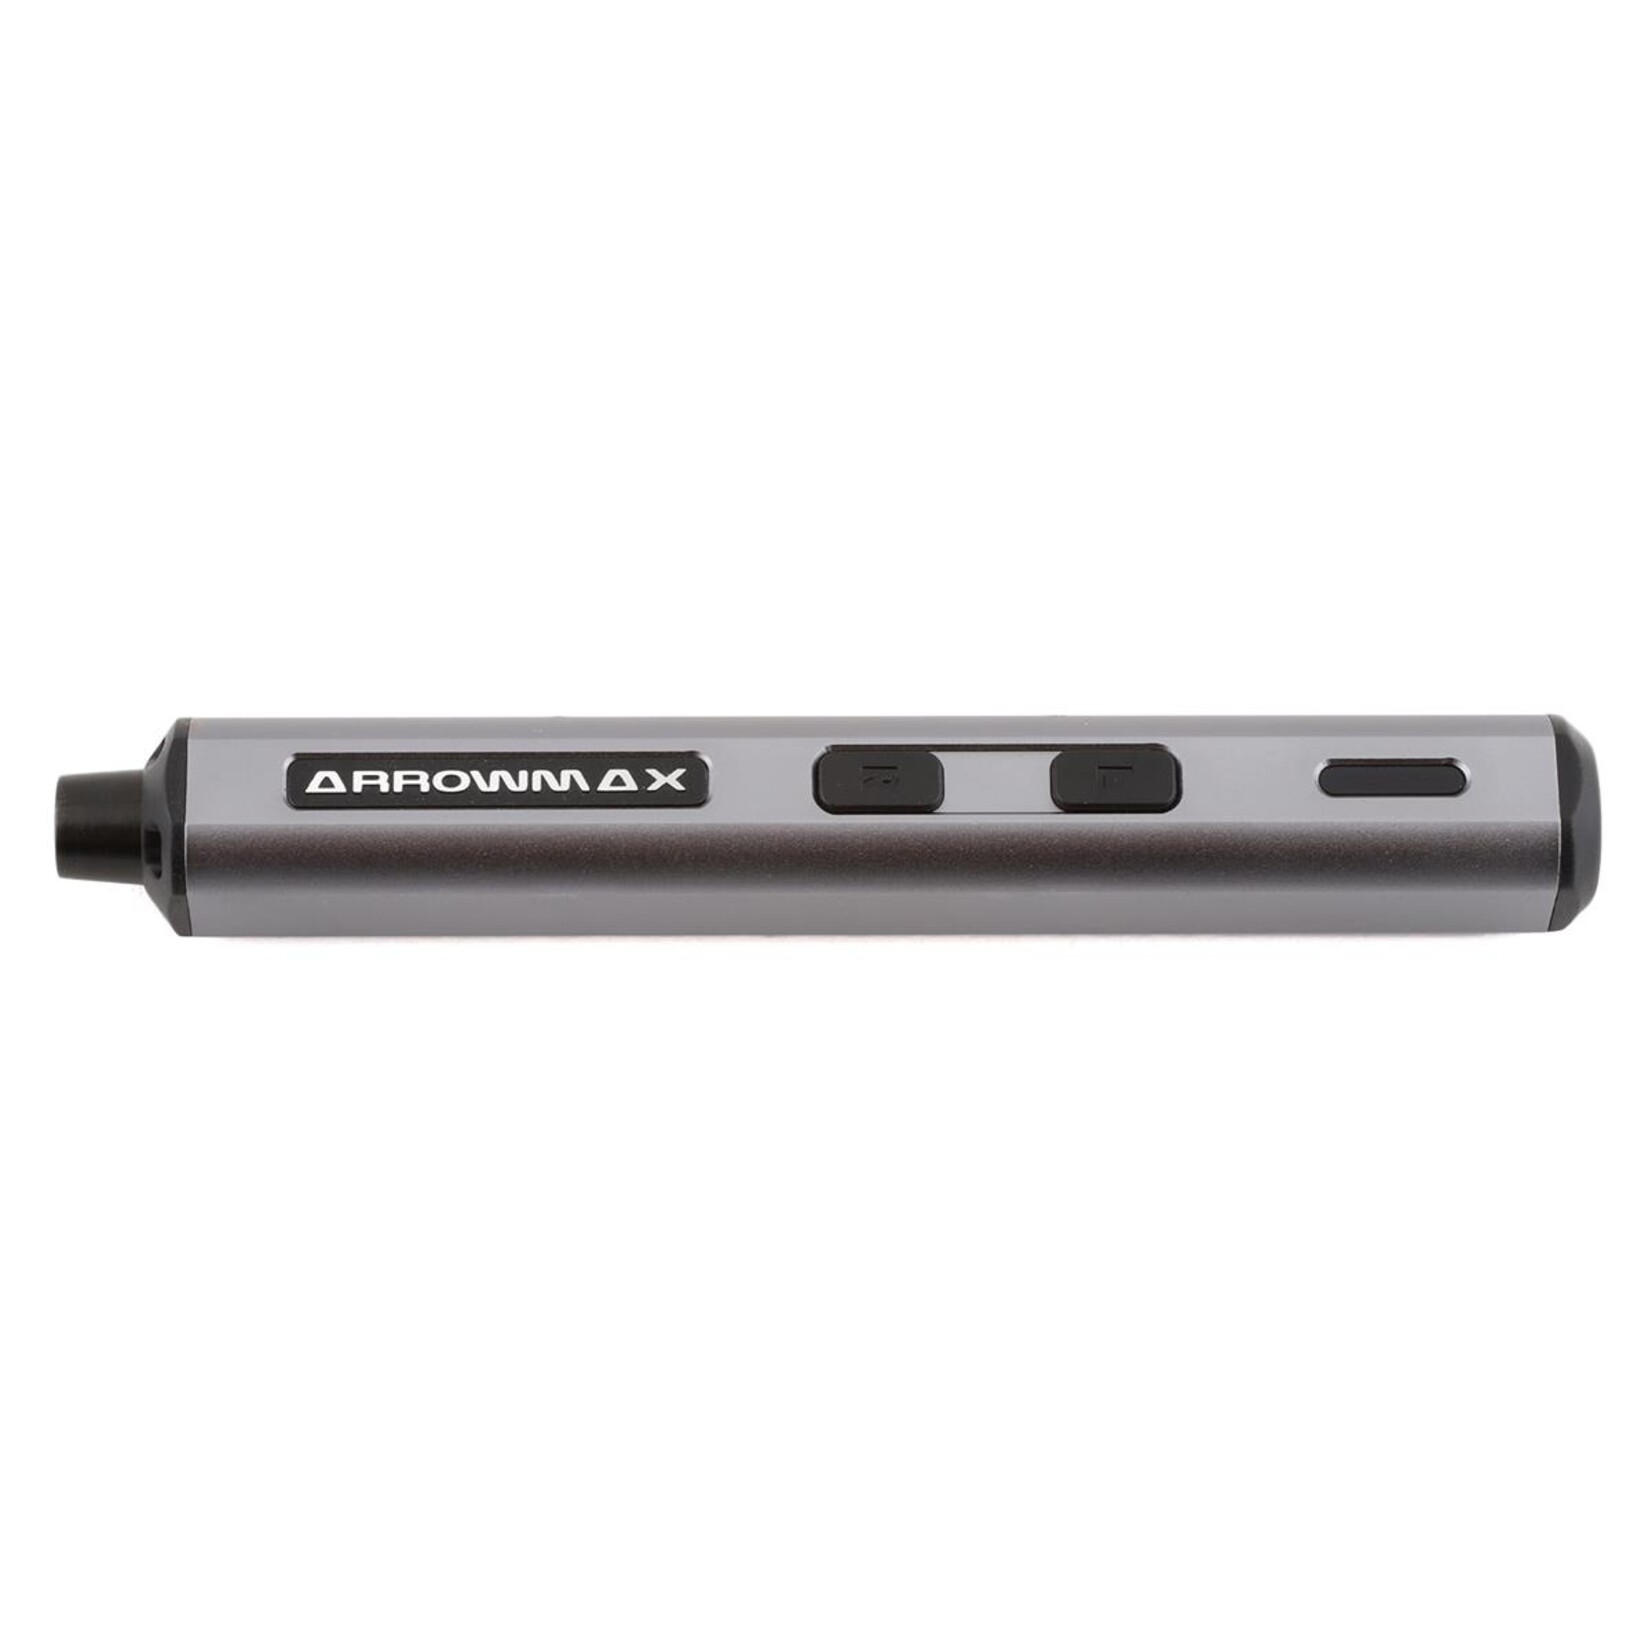 AM Arrowmax AM Arrowmax SES 28-Piece Mini Electric Screwdriver w/Aluminum Case (Space Grey) #AM199911G